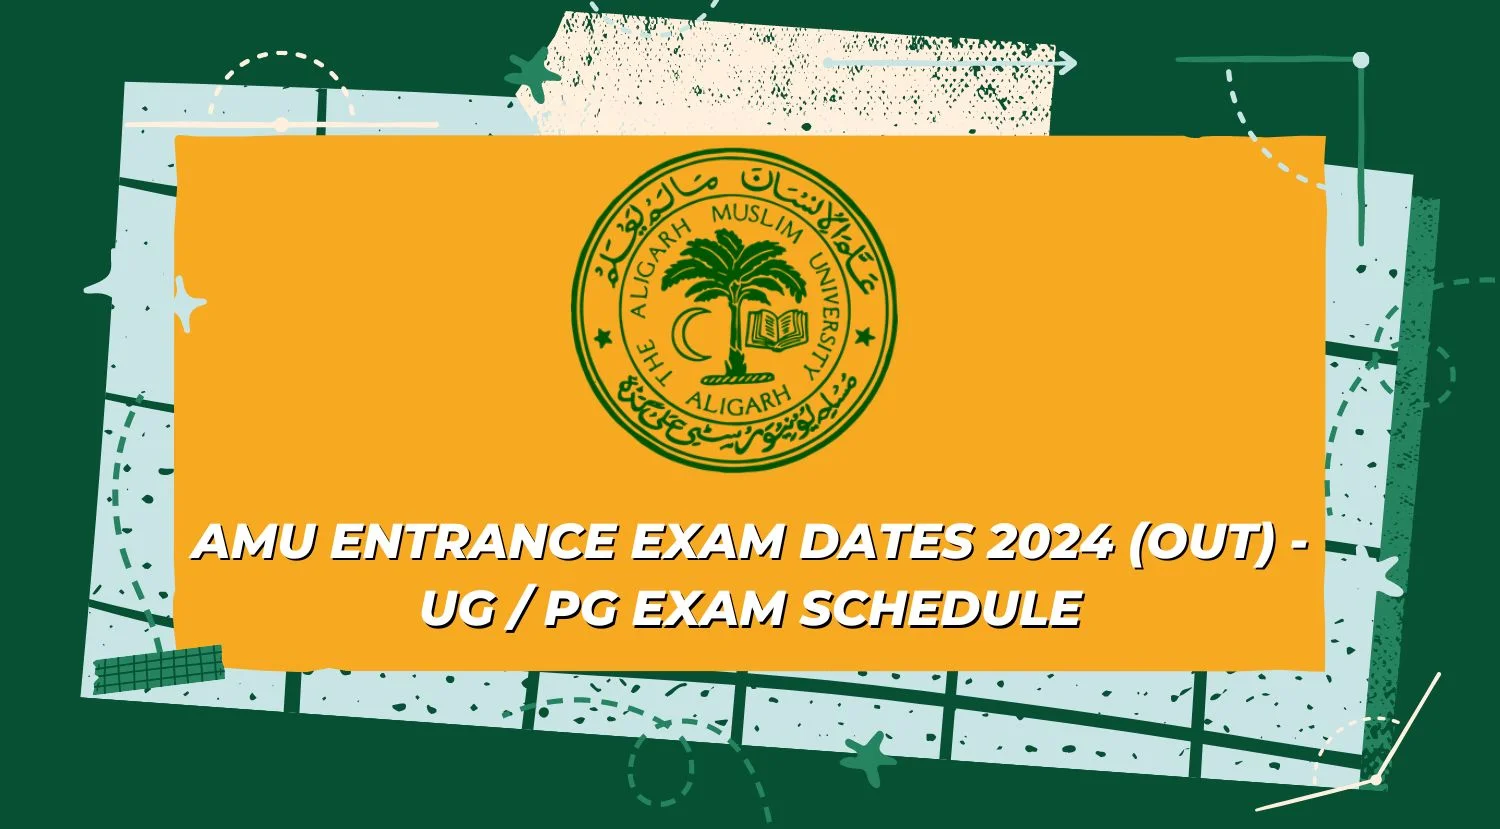 AMU Entrance Exam Dates 2024 Out - UG PG Exam Schedule